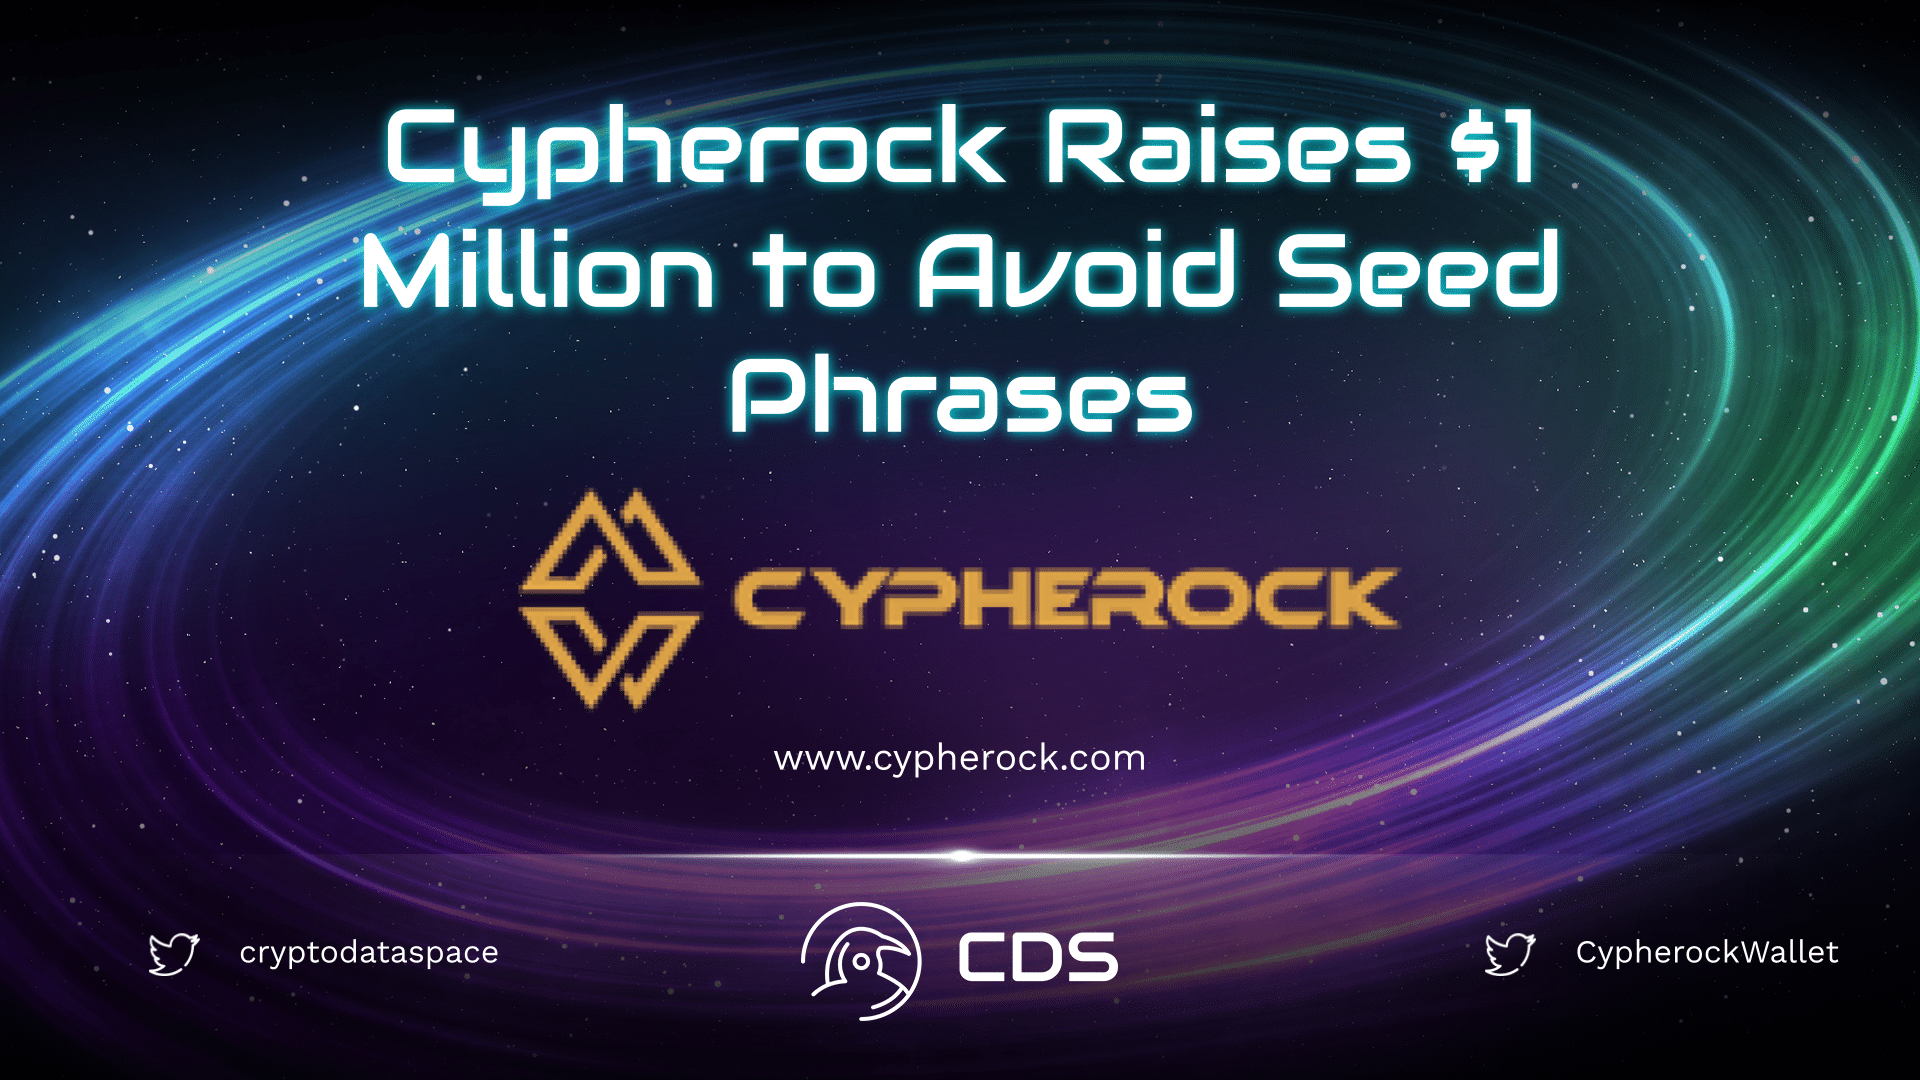 Cypherock Raises $1 Million to Avoid Seed Phrases